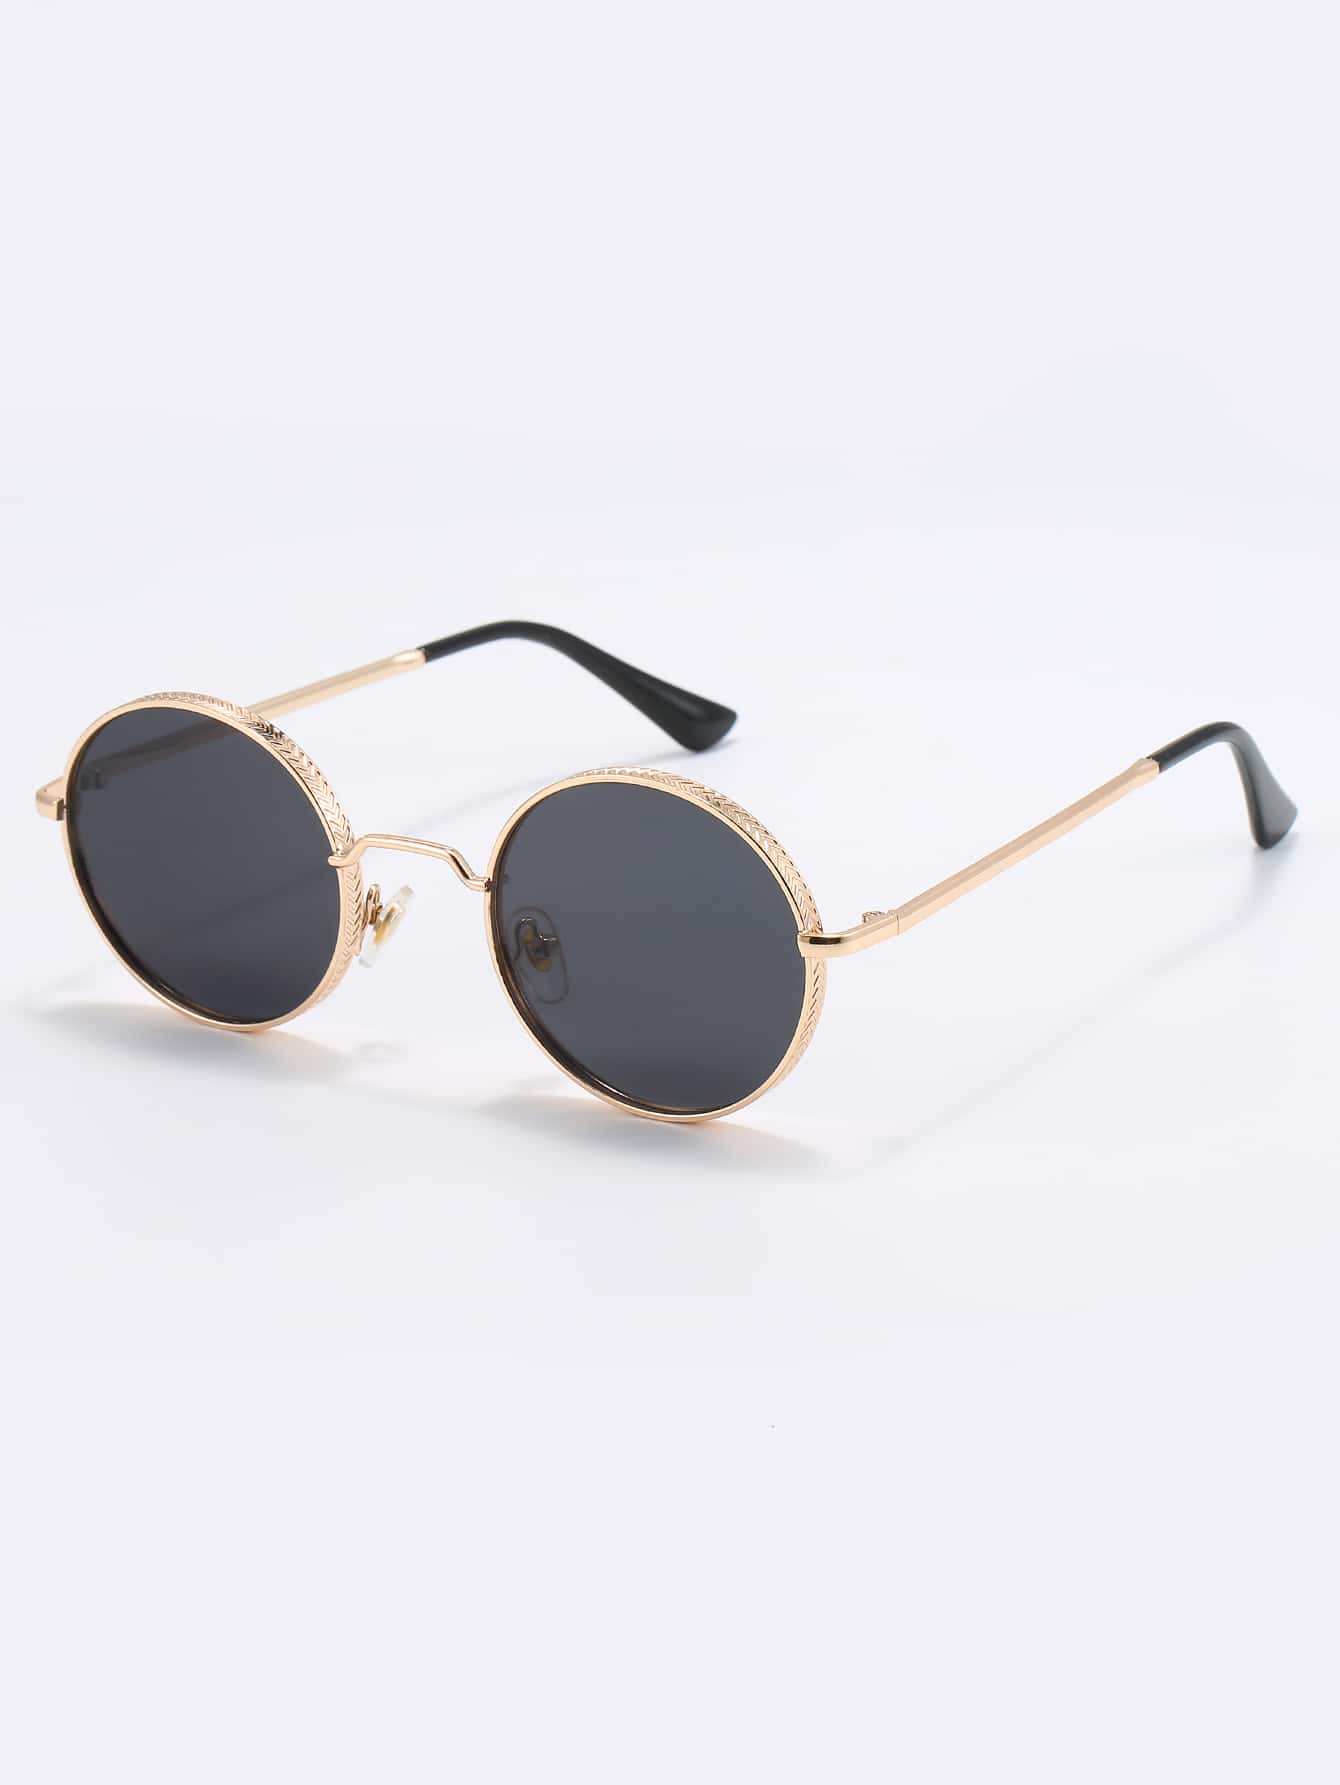 Details 288+ round gold metal sunglasses latest